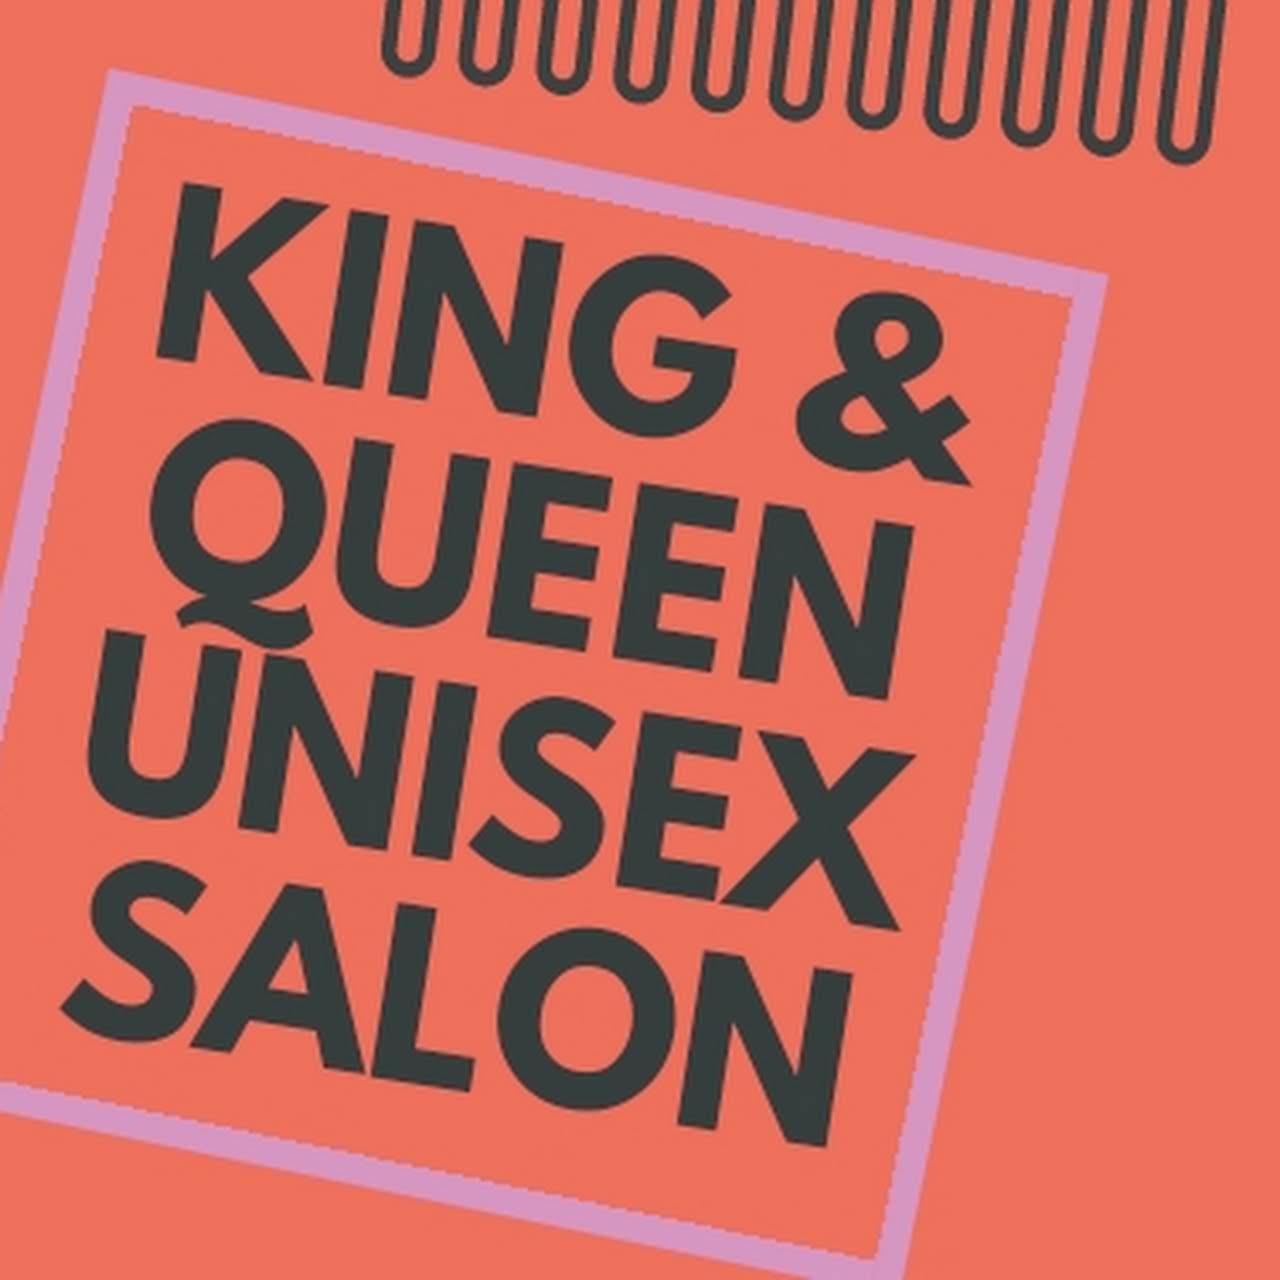 KING & QUEEN UNISEX SALON - Logo